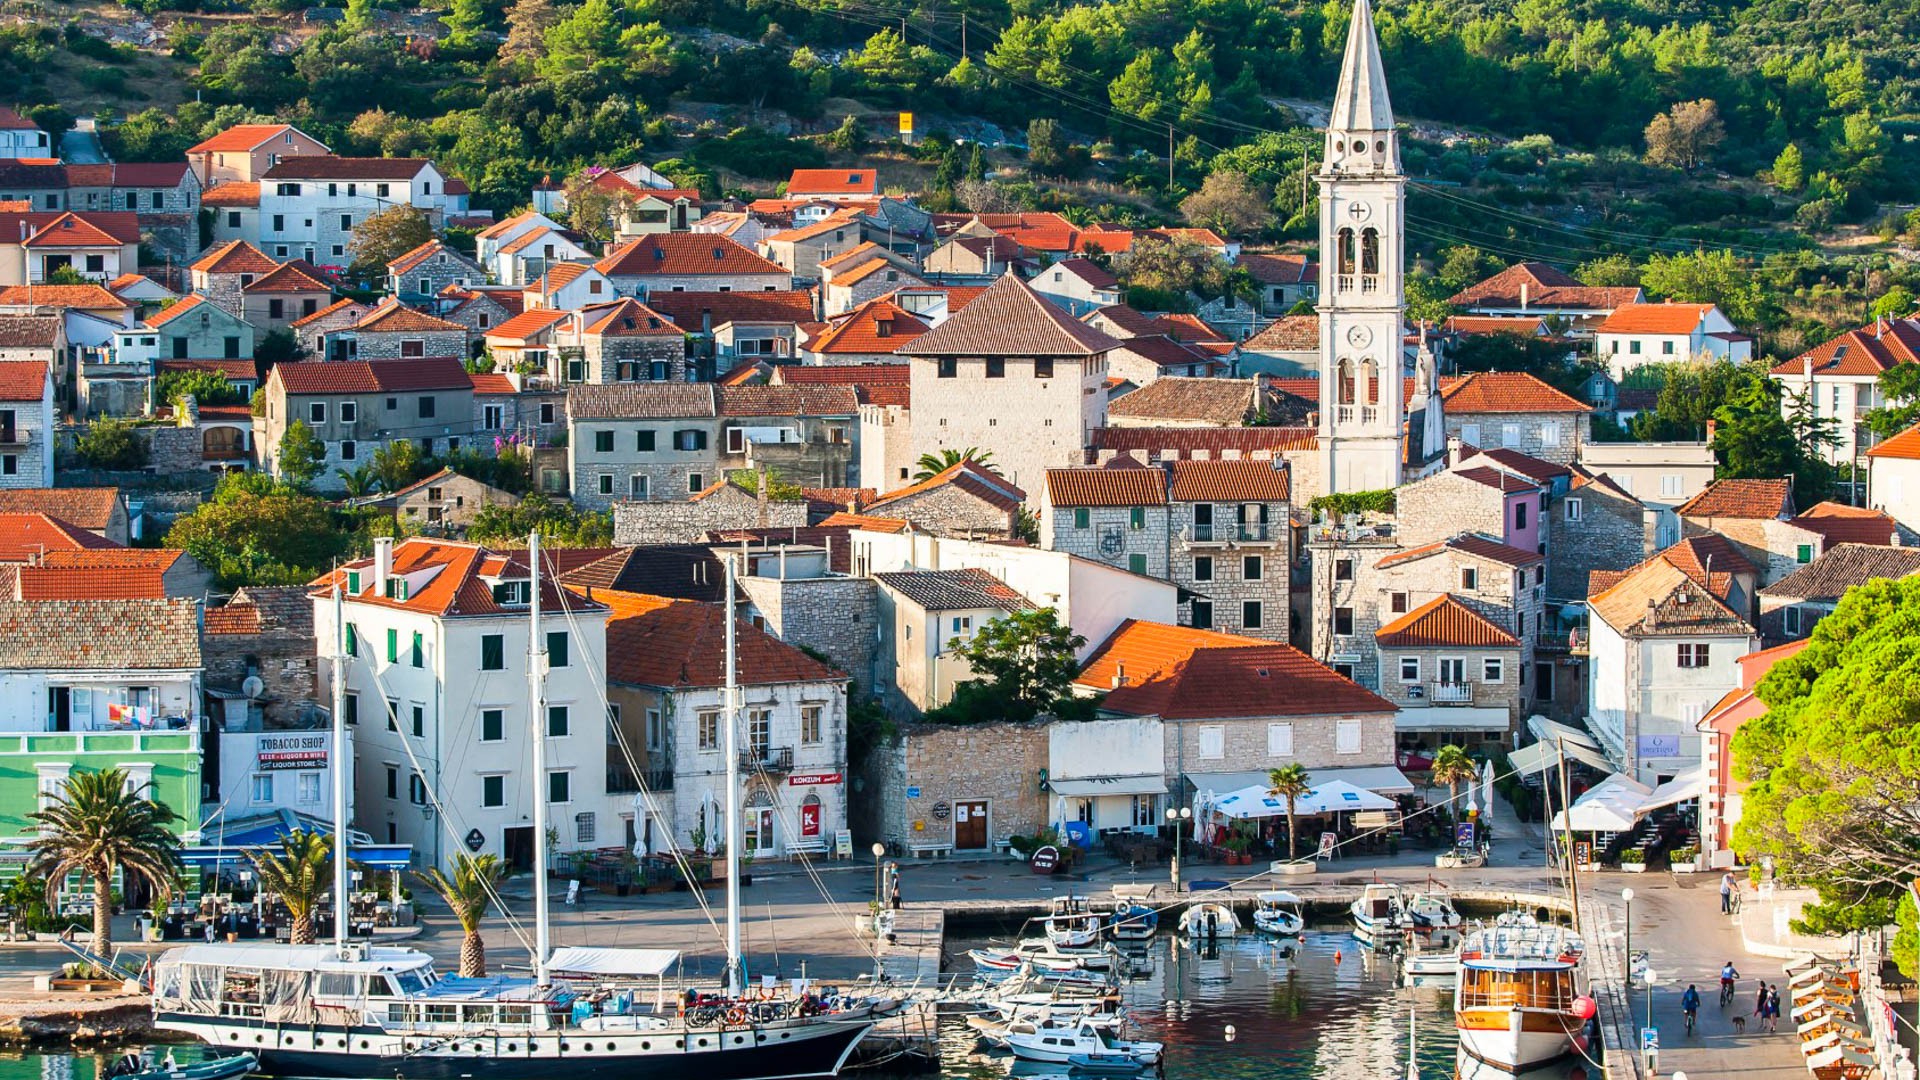 Jelsa (Hvar Island) - Adriatic Sea | Croatia Cruise Croatia Cruise